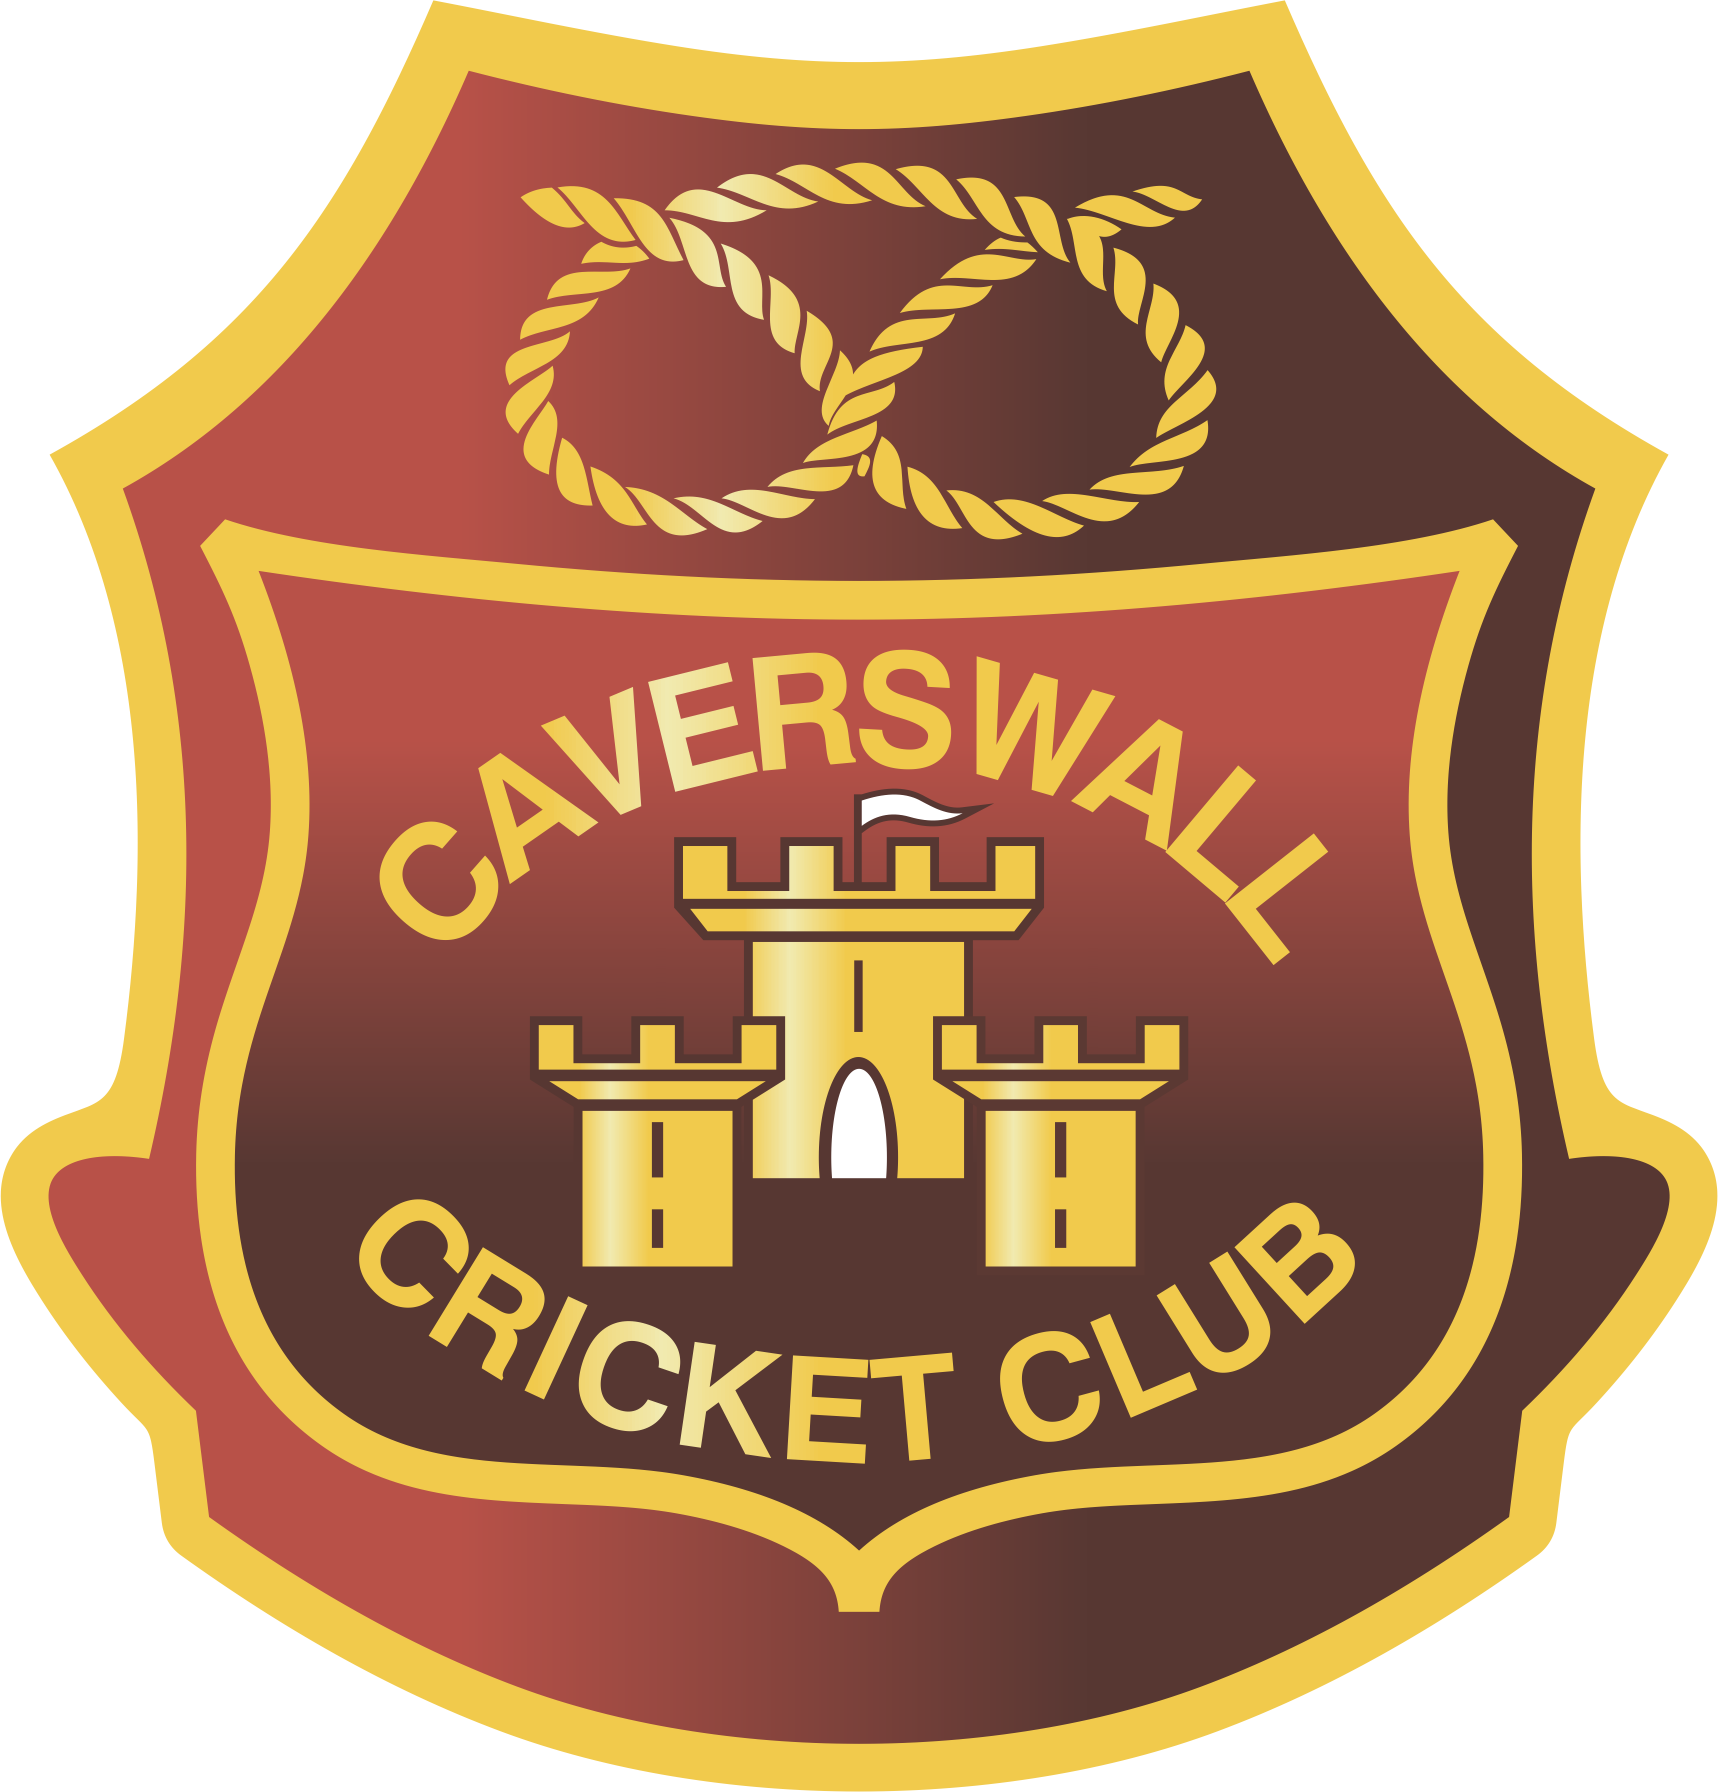 Caverswall CC (Senior Section) Teamwear